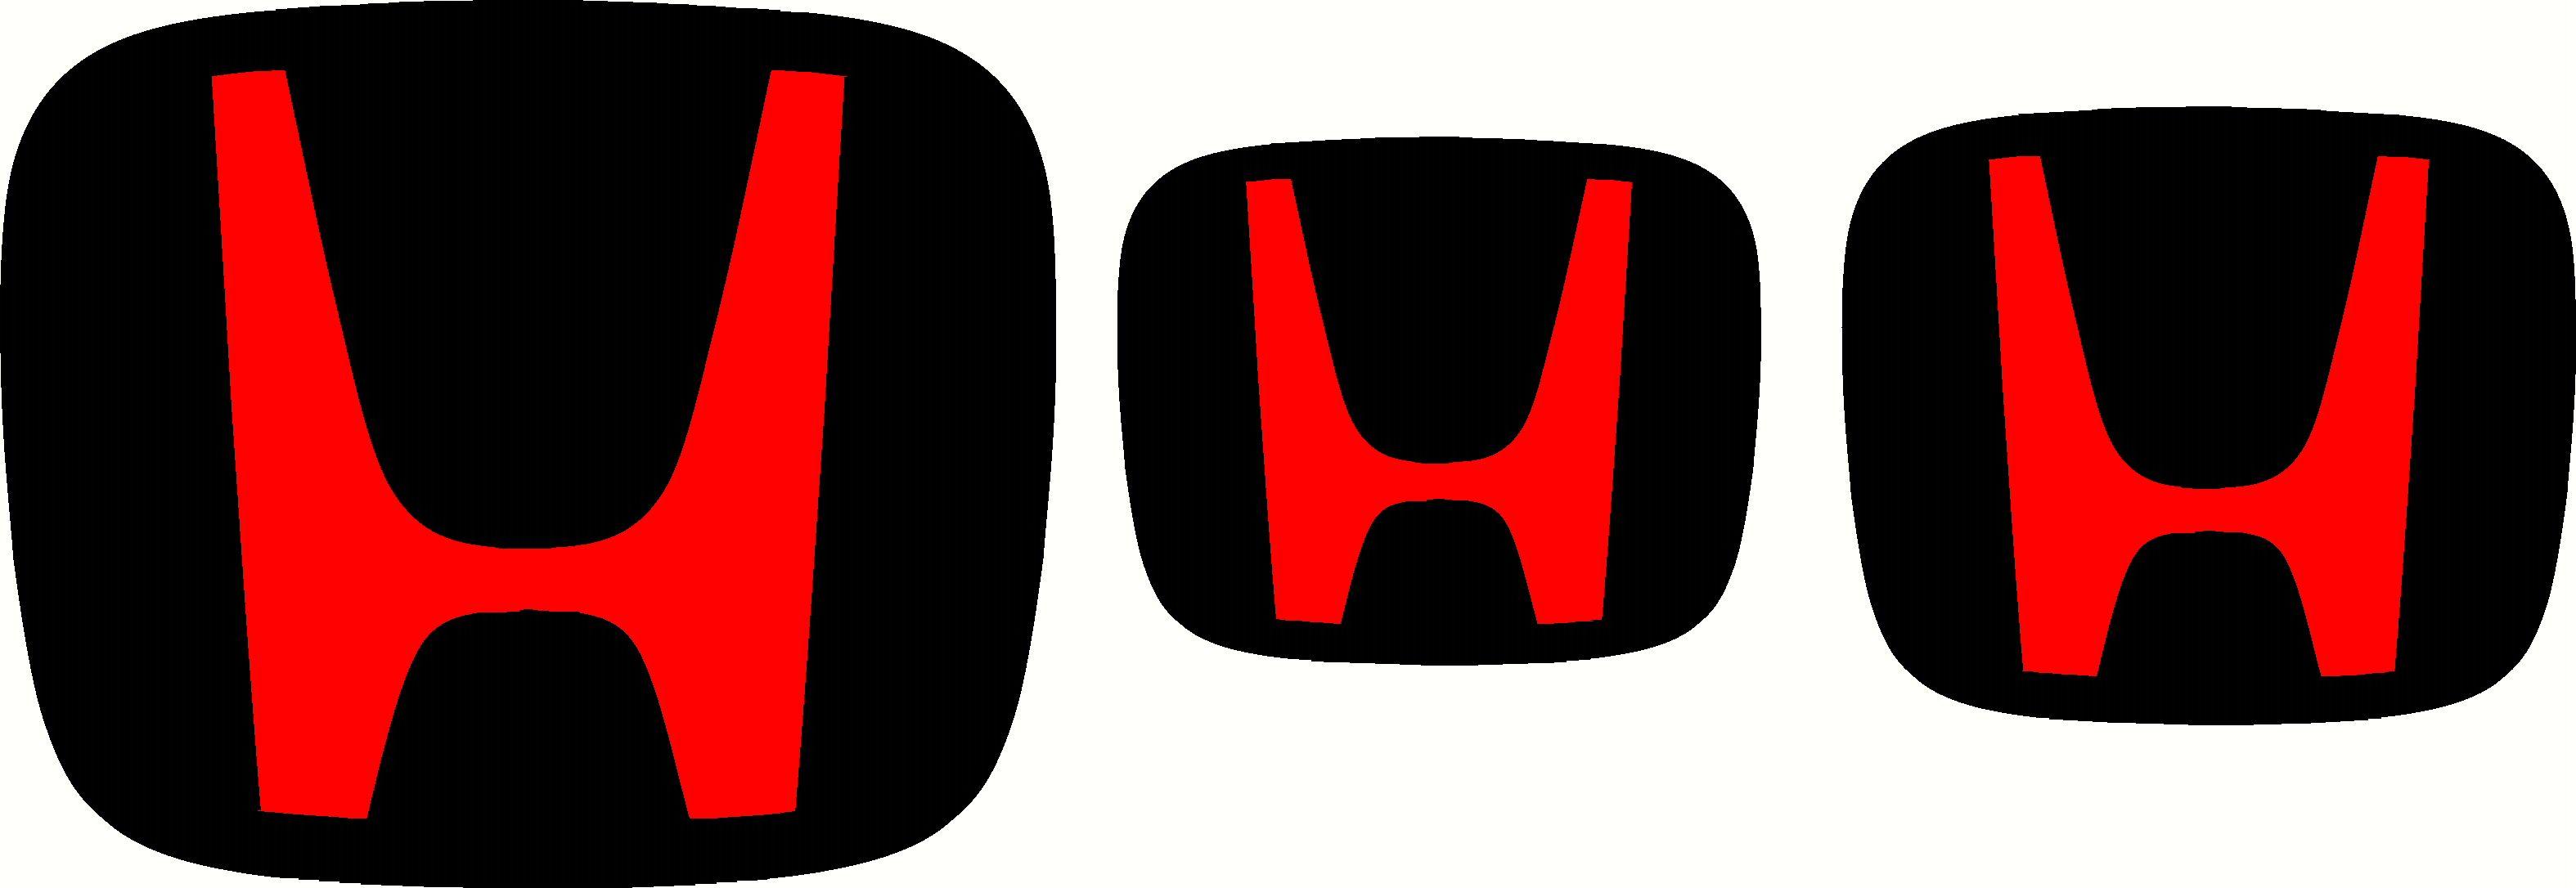 Honda Civic Type R Logo - Honda Civic Type R EP3 Pre Facelift Gel Badge Overlays